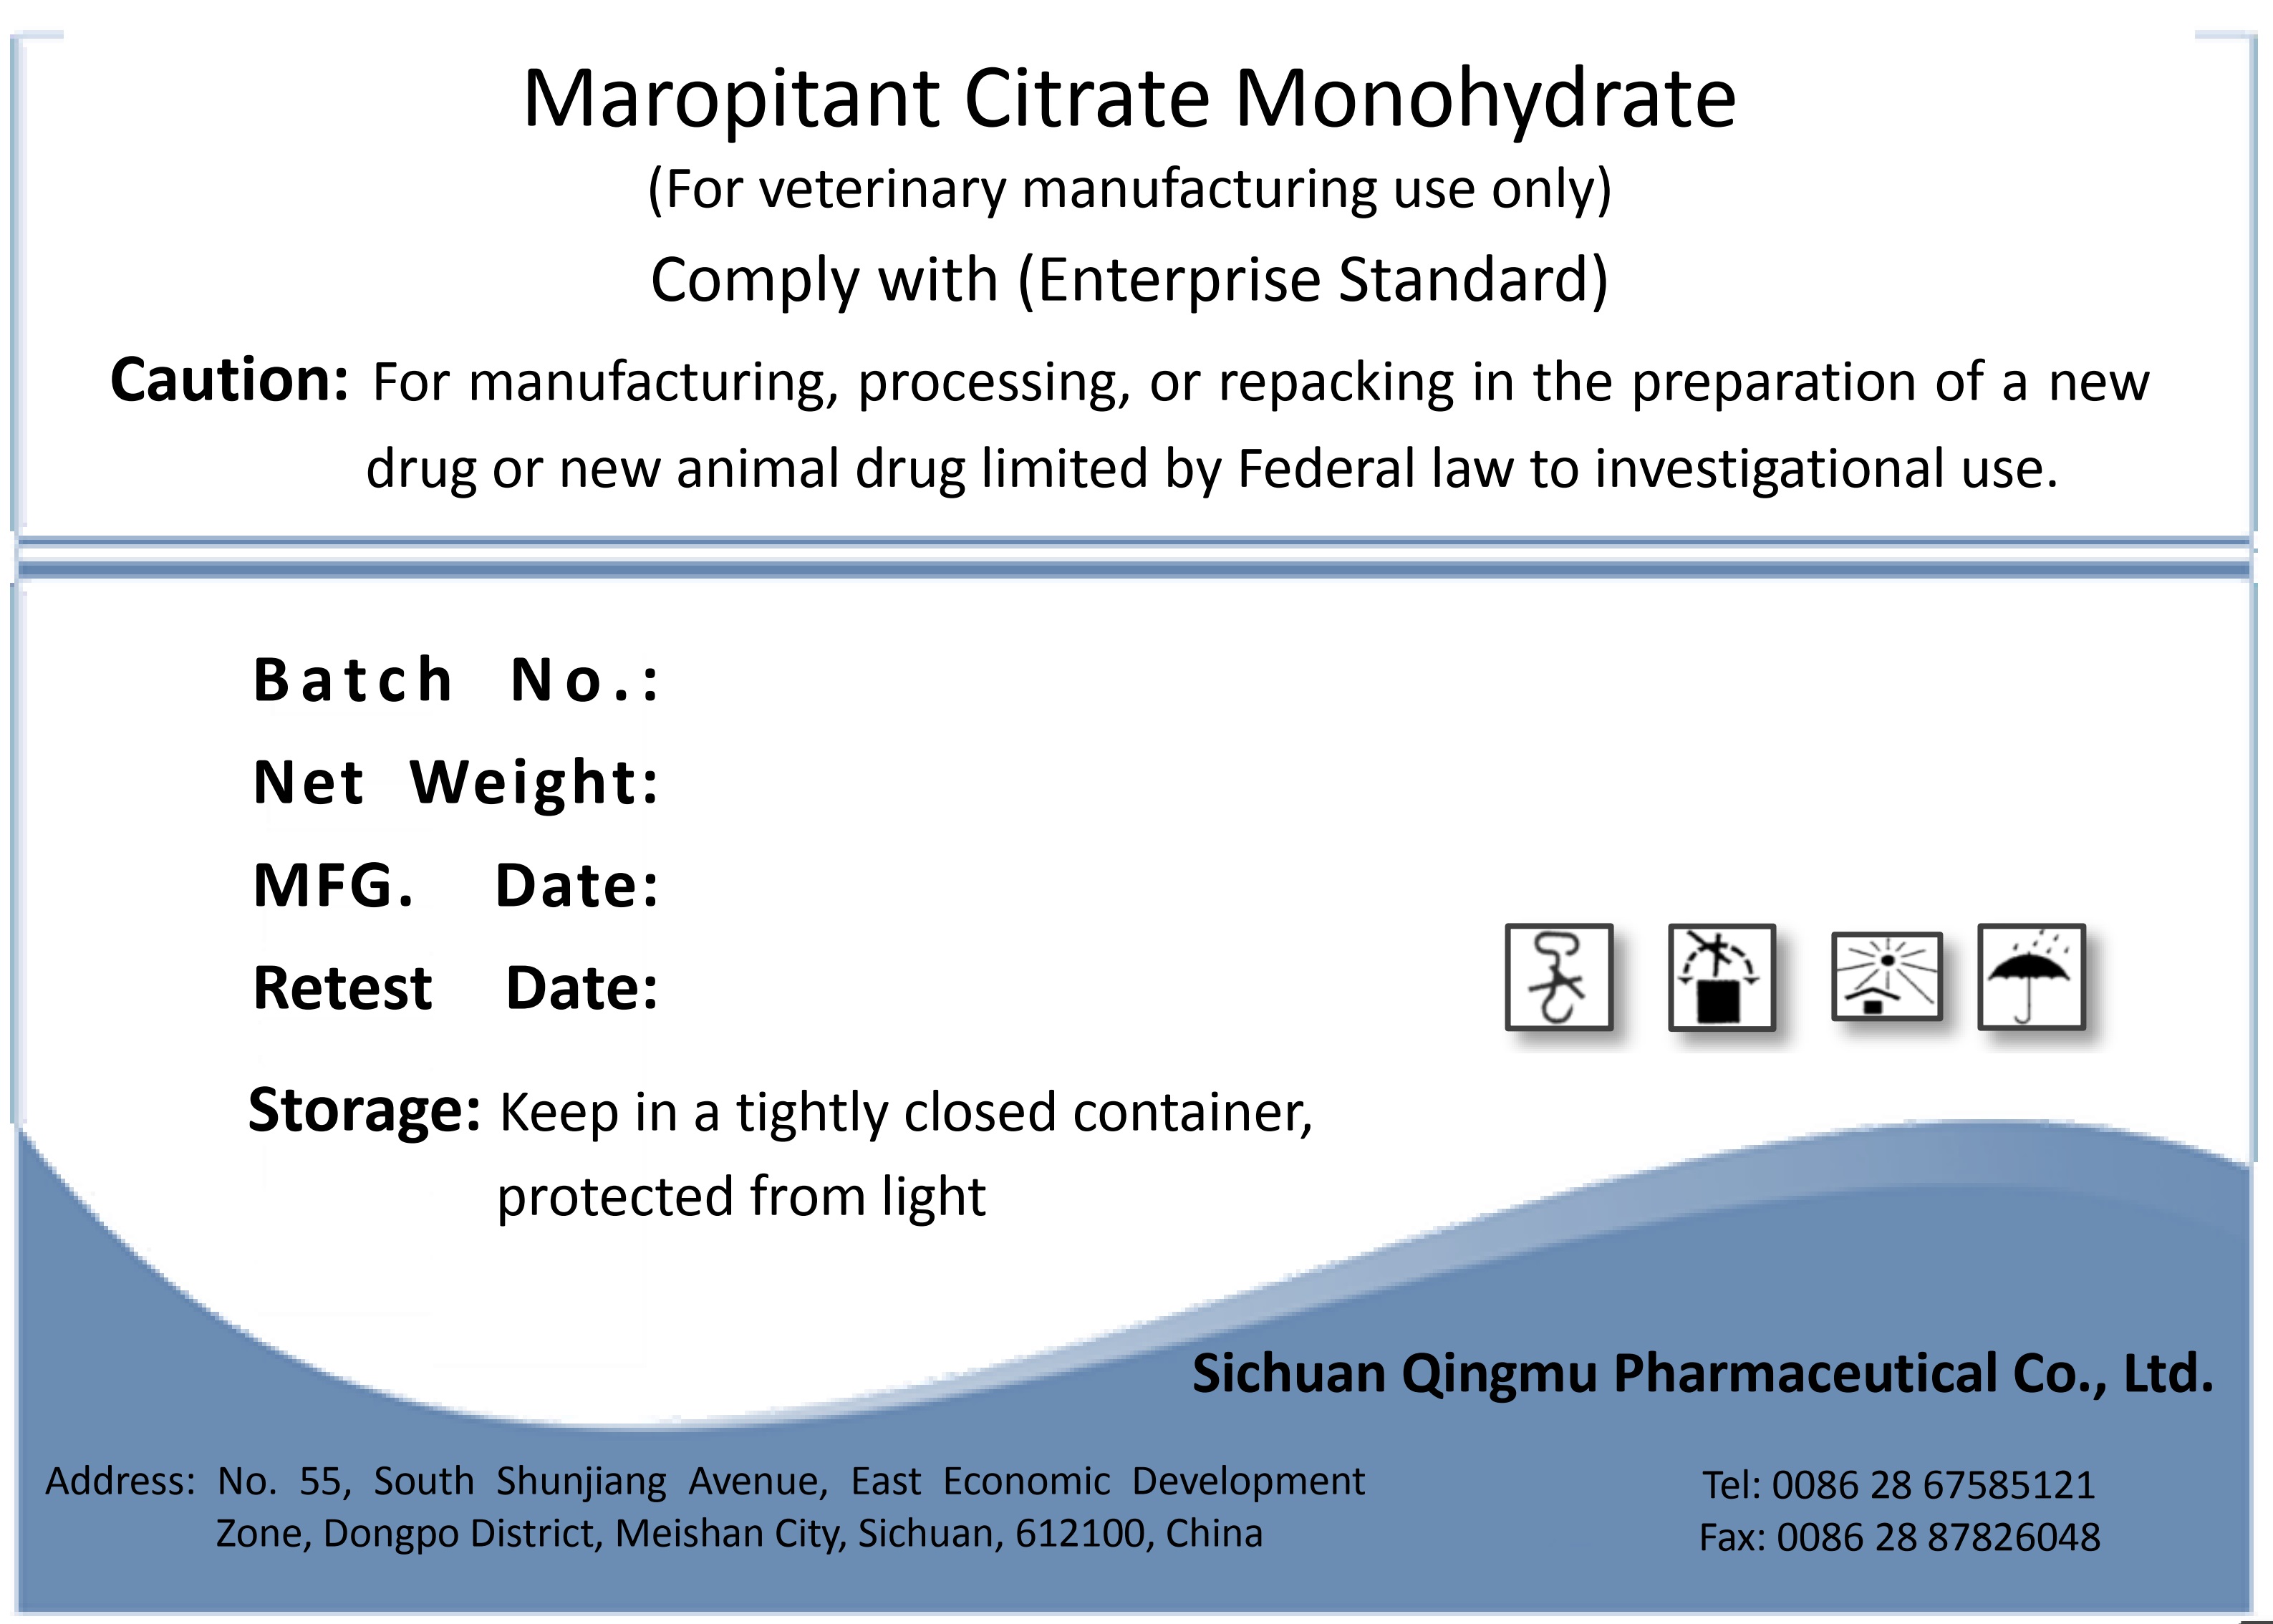 Label of maropitant citrate